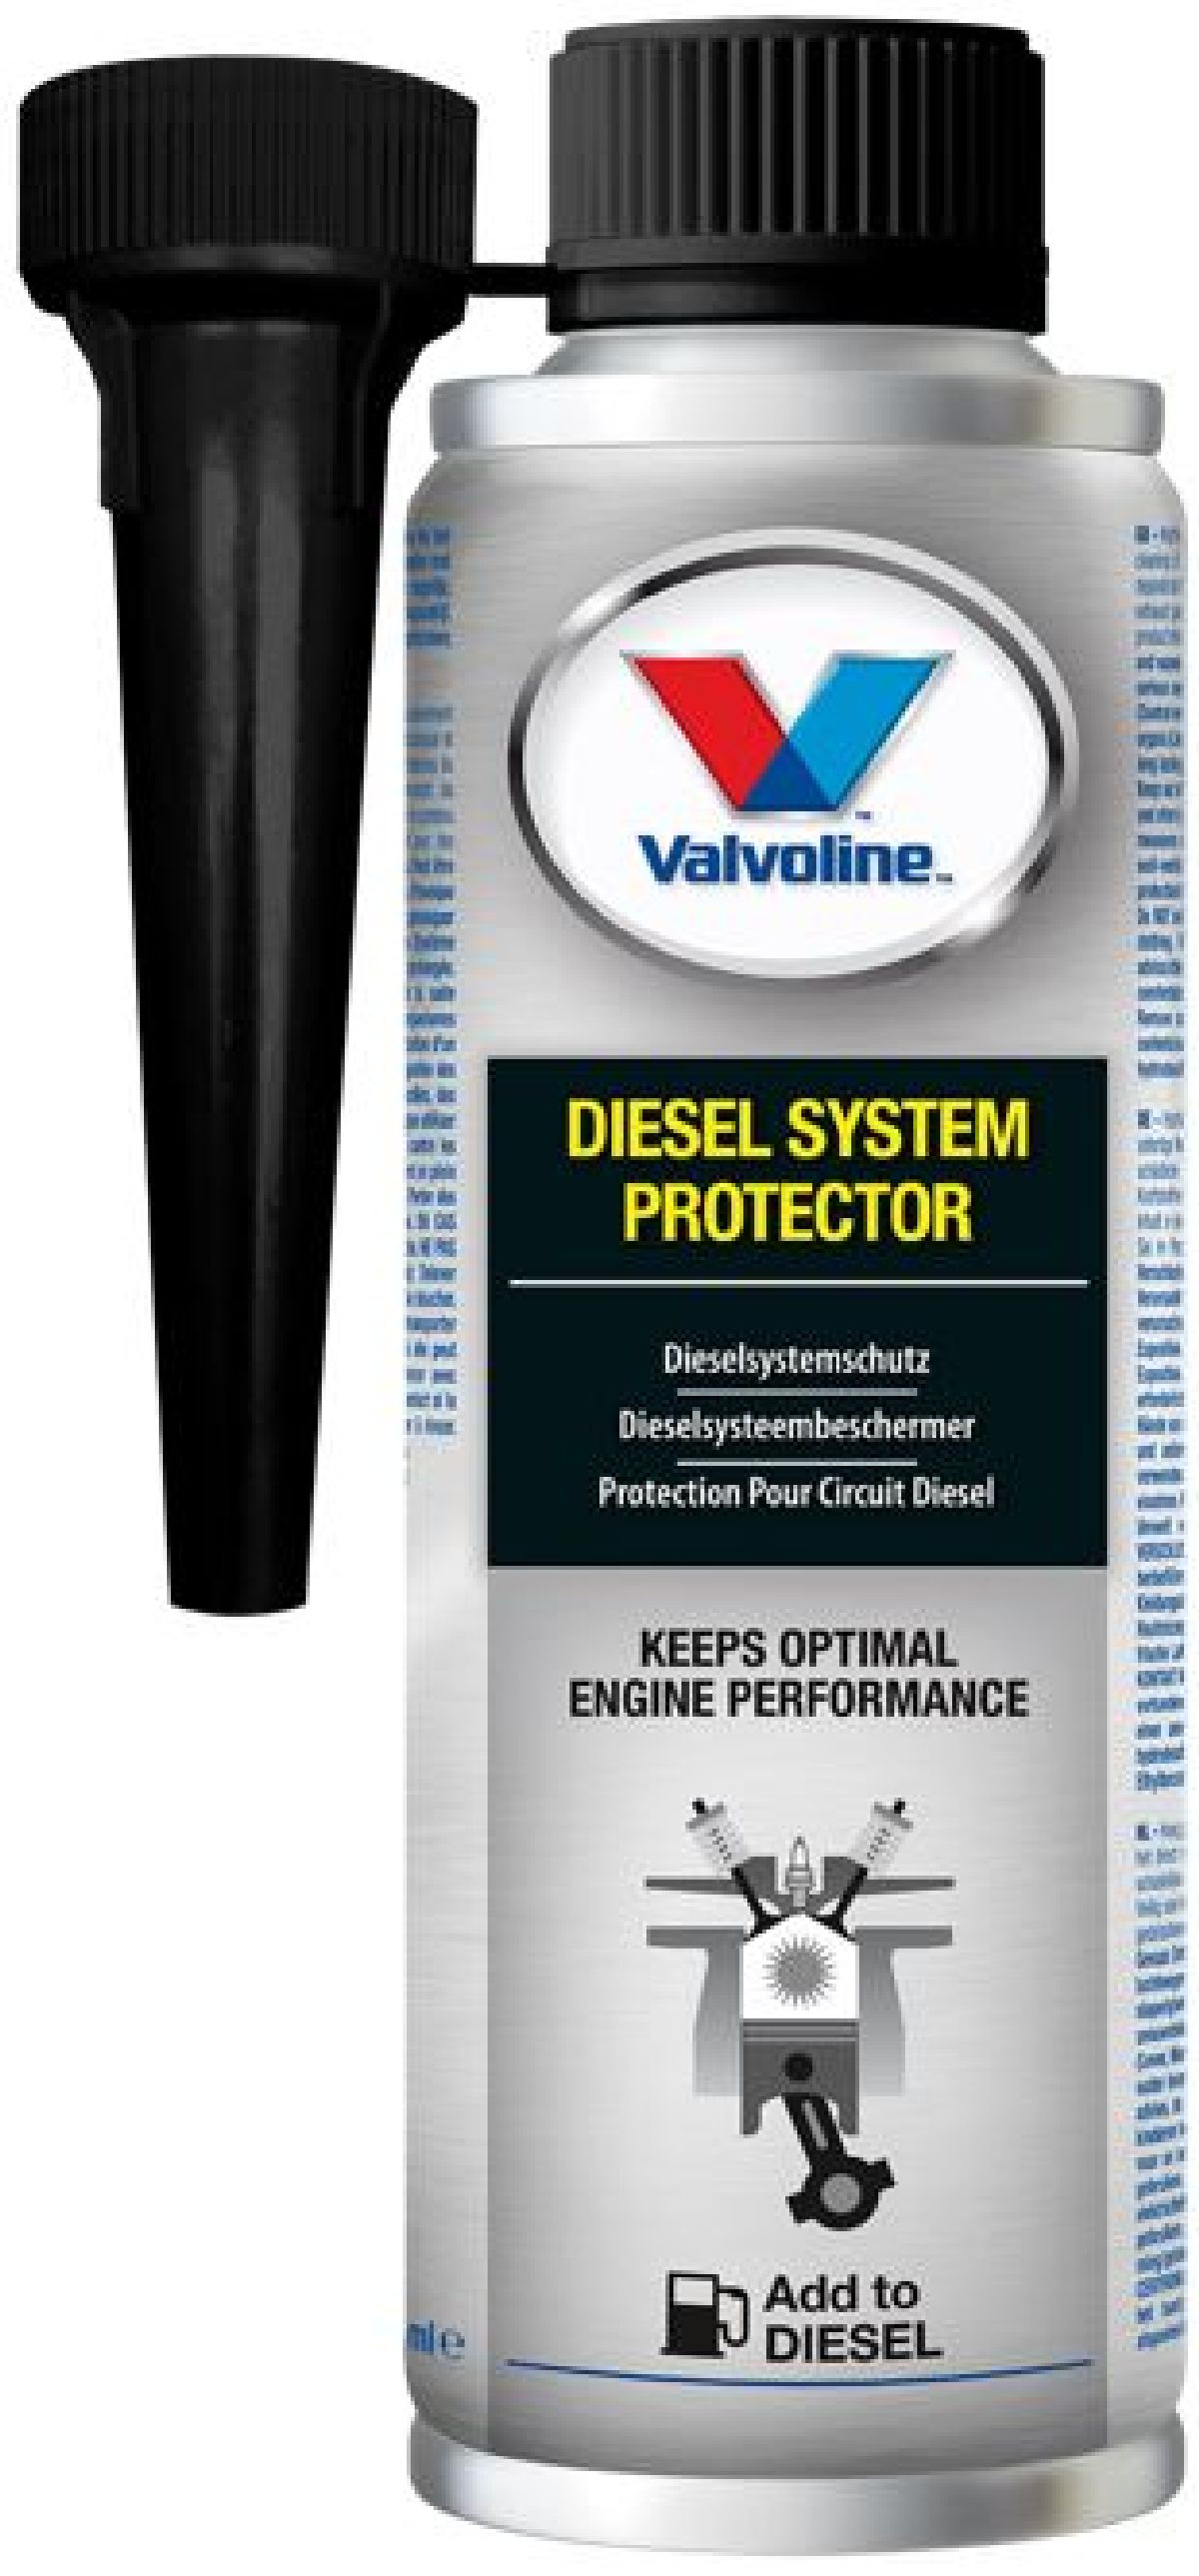 Diesel System Protector